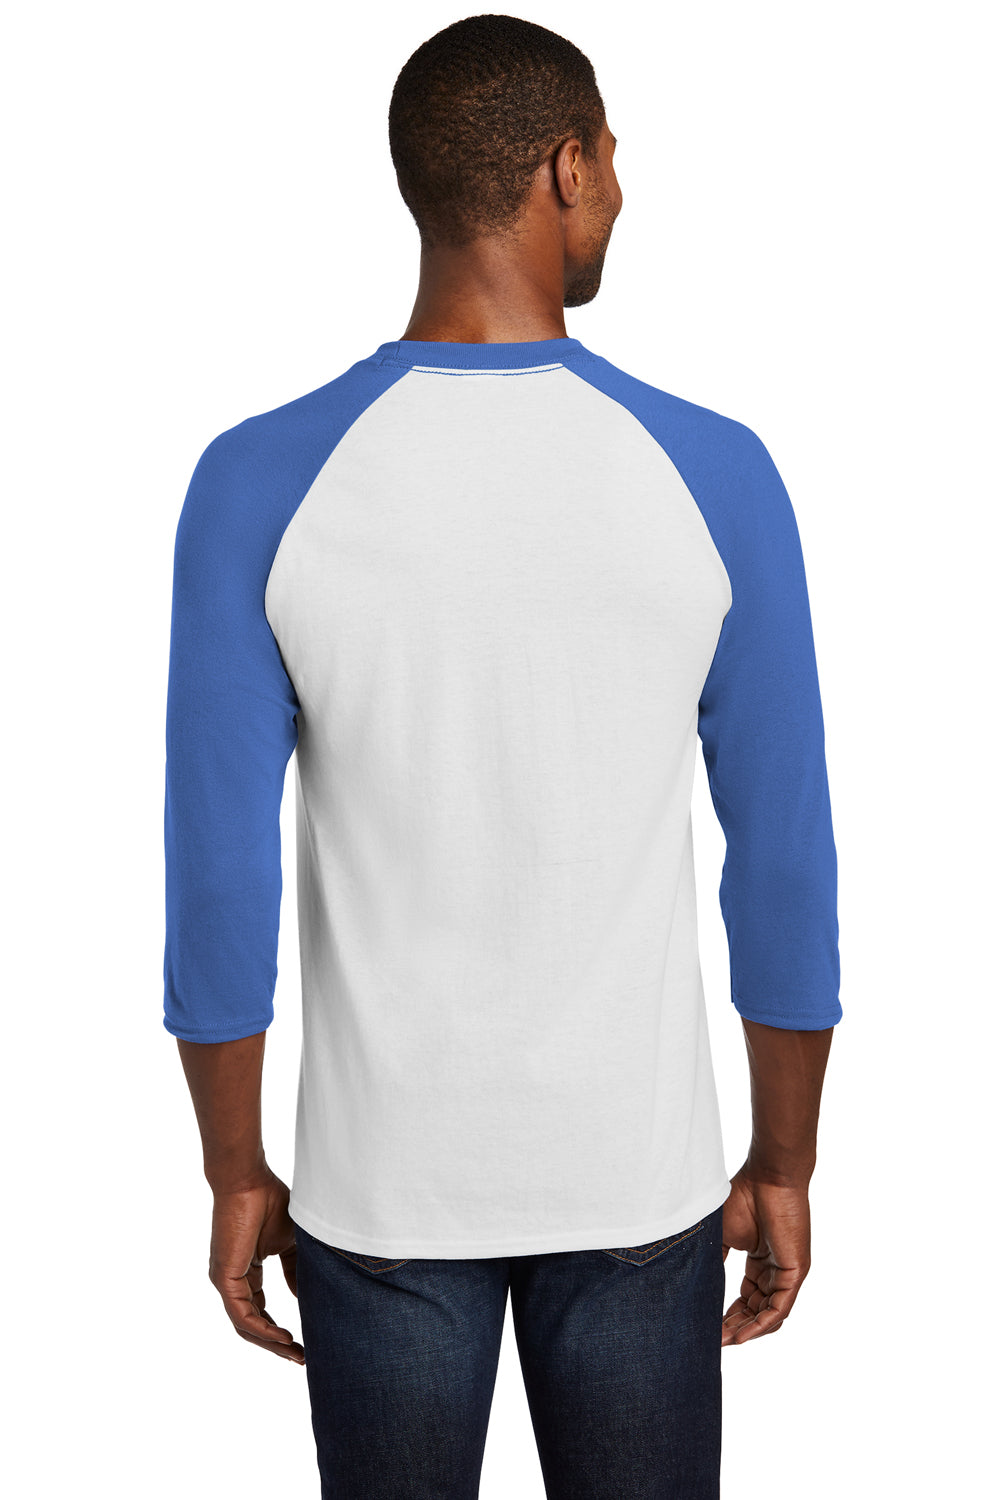 Port & Company PC55RS Mens Core Moisture Wicking 3/4 Sleeve Crewneck T-Shirt White/Royal Blue Back